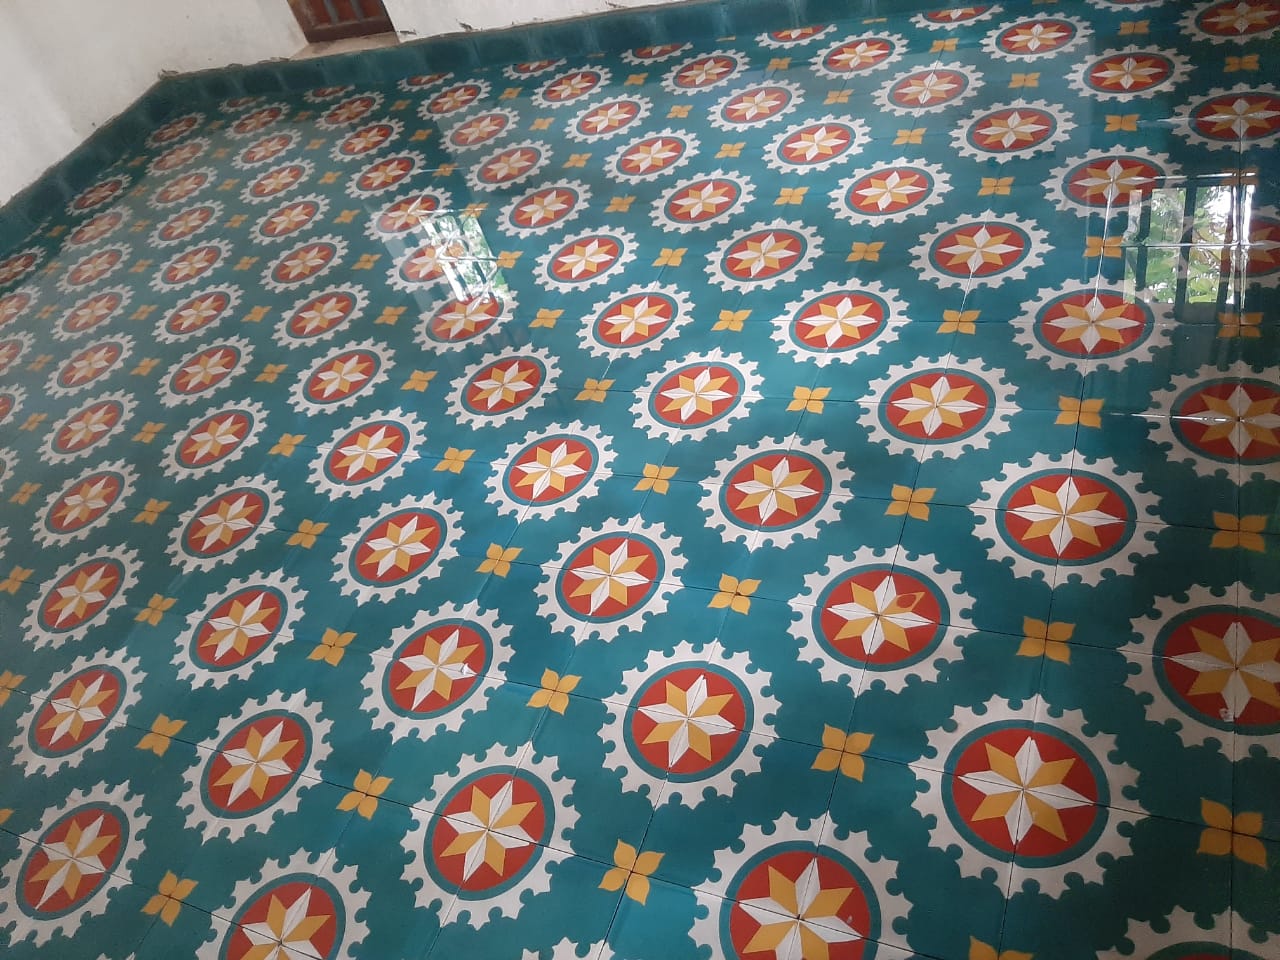 athangudi tiles designs